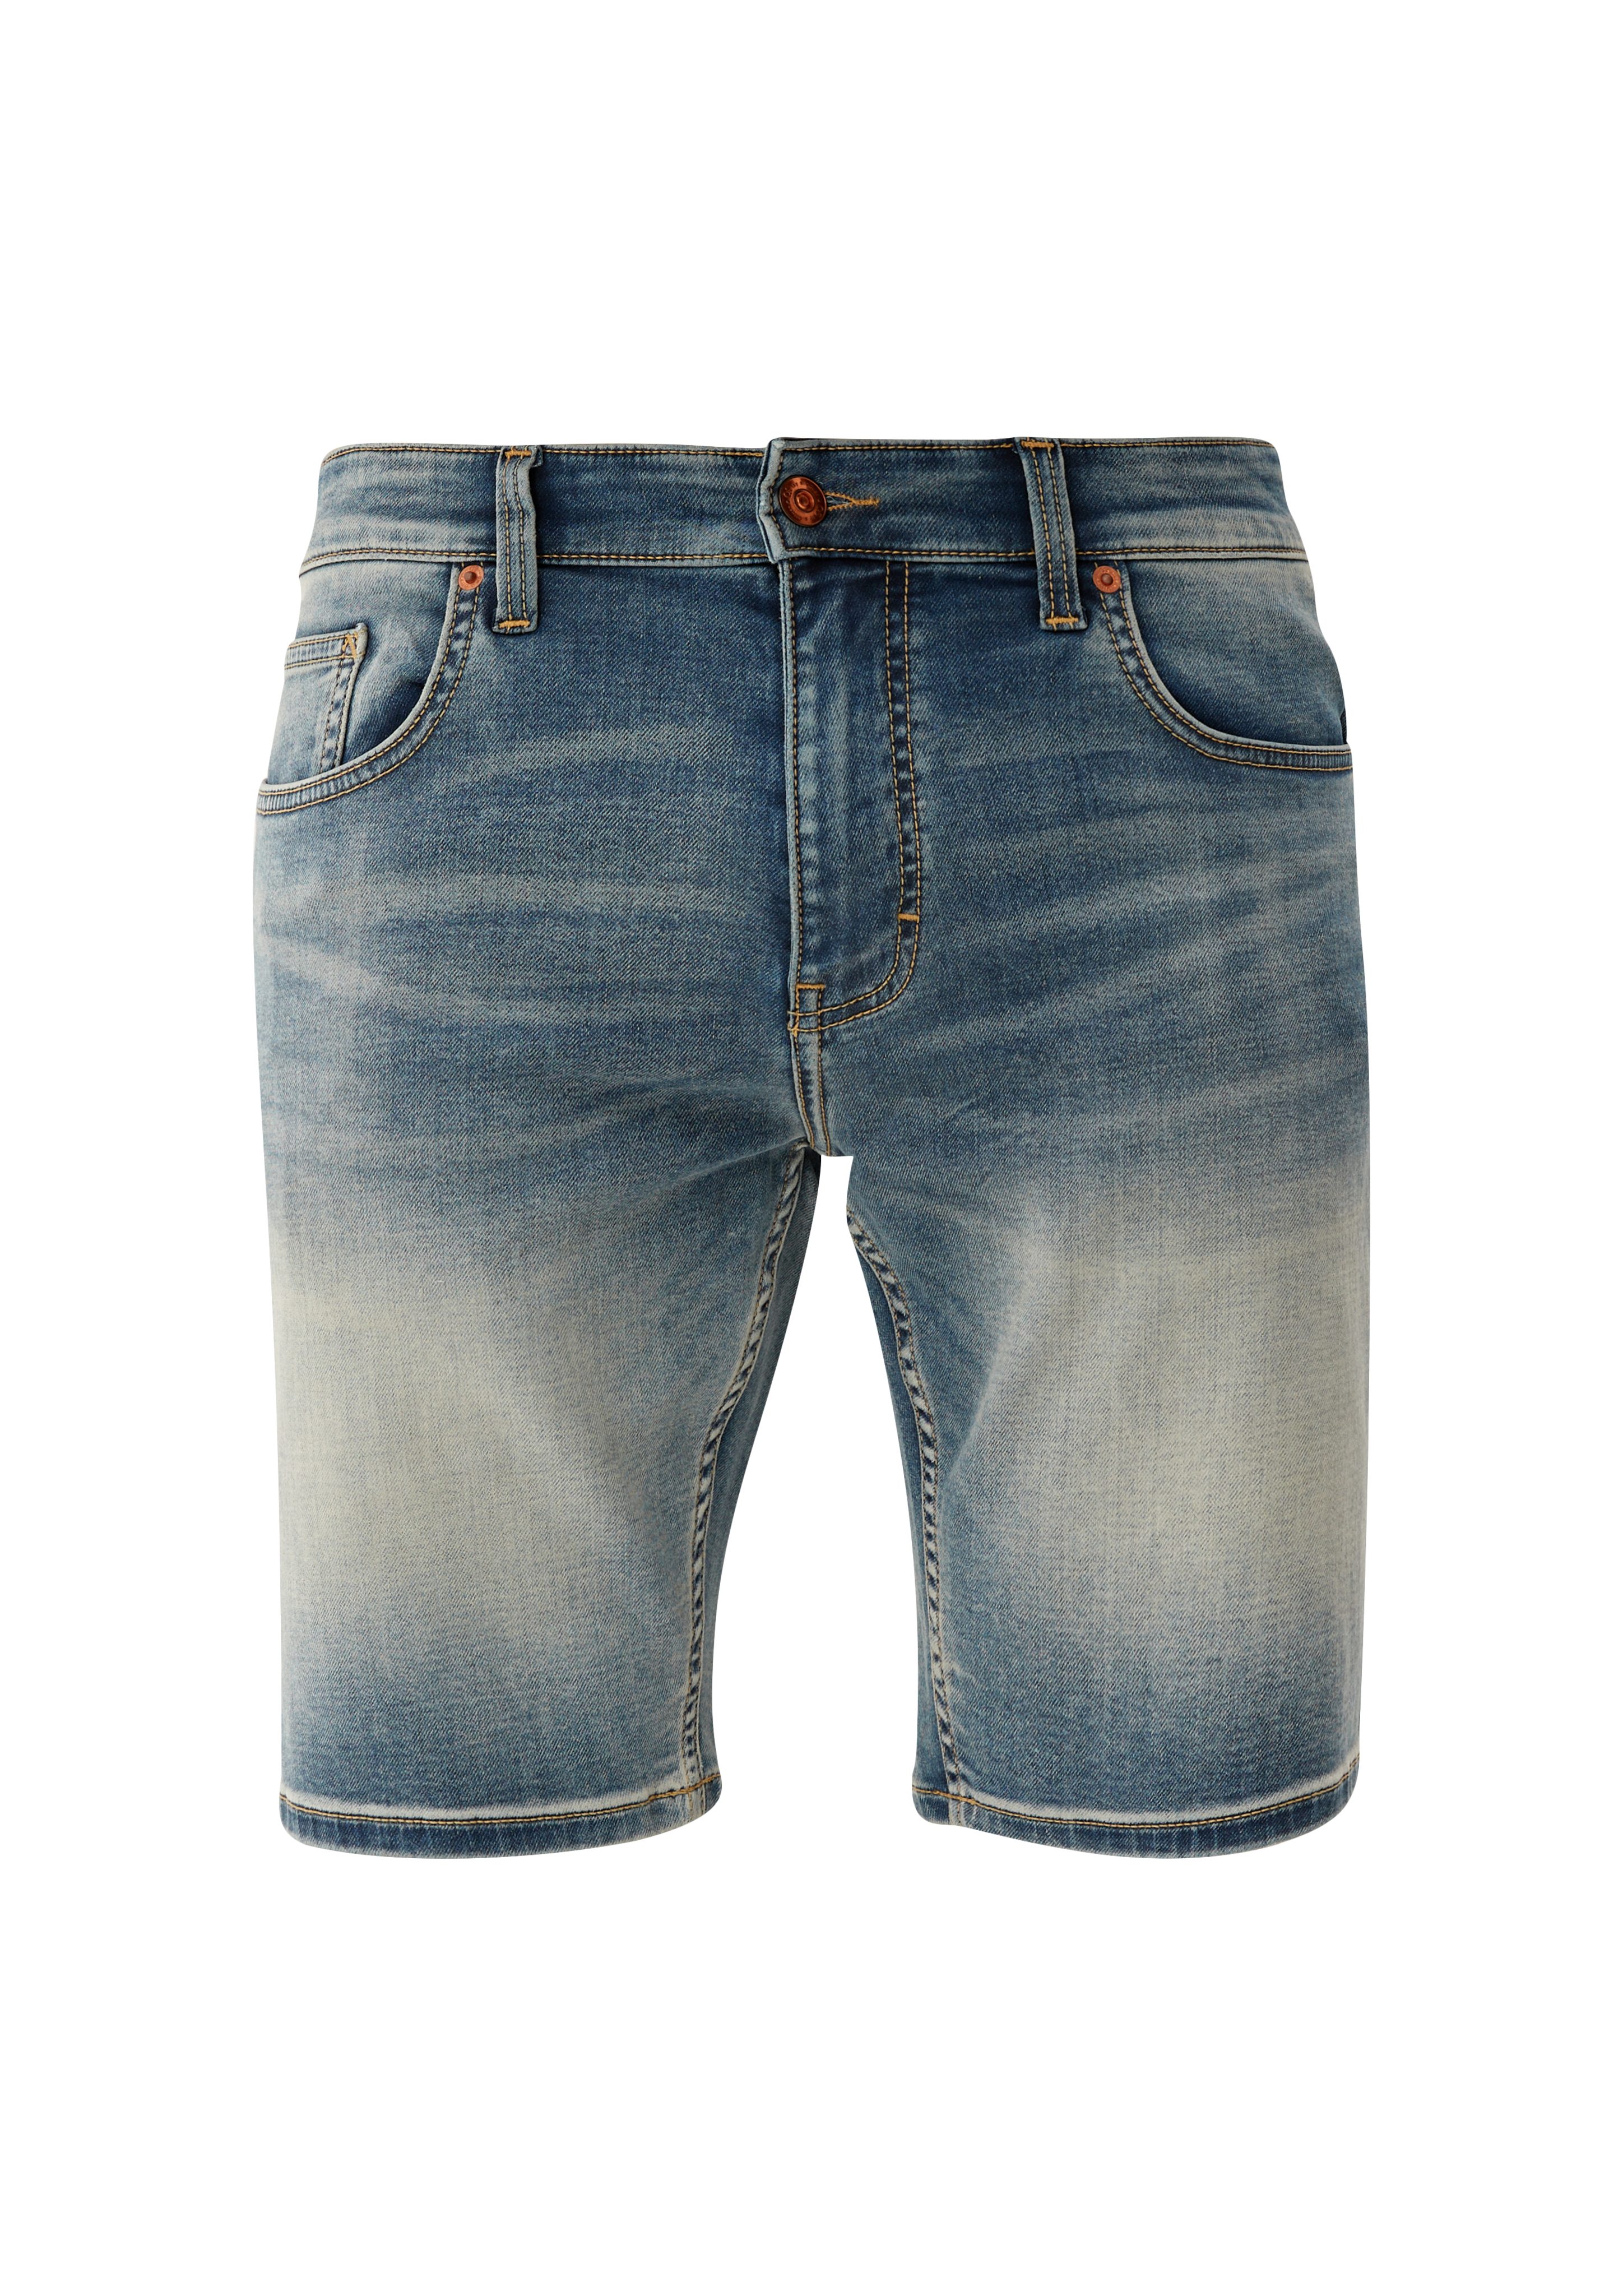 / hellblau Straight Jeansshorts John Rise / QS Fit Waschung Jeans-Shorts Regular Leg Mid /